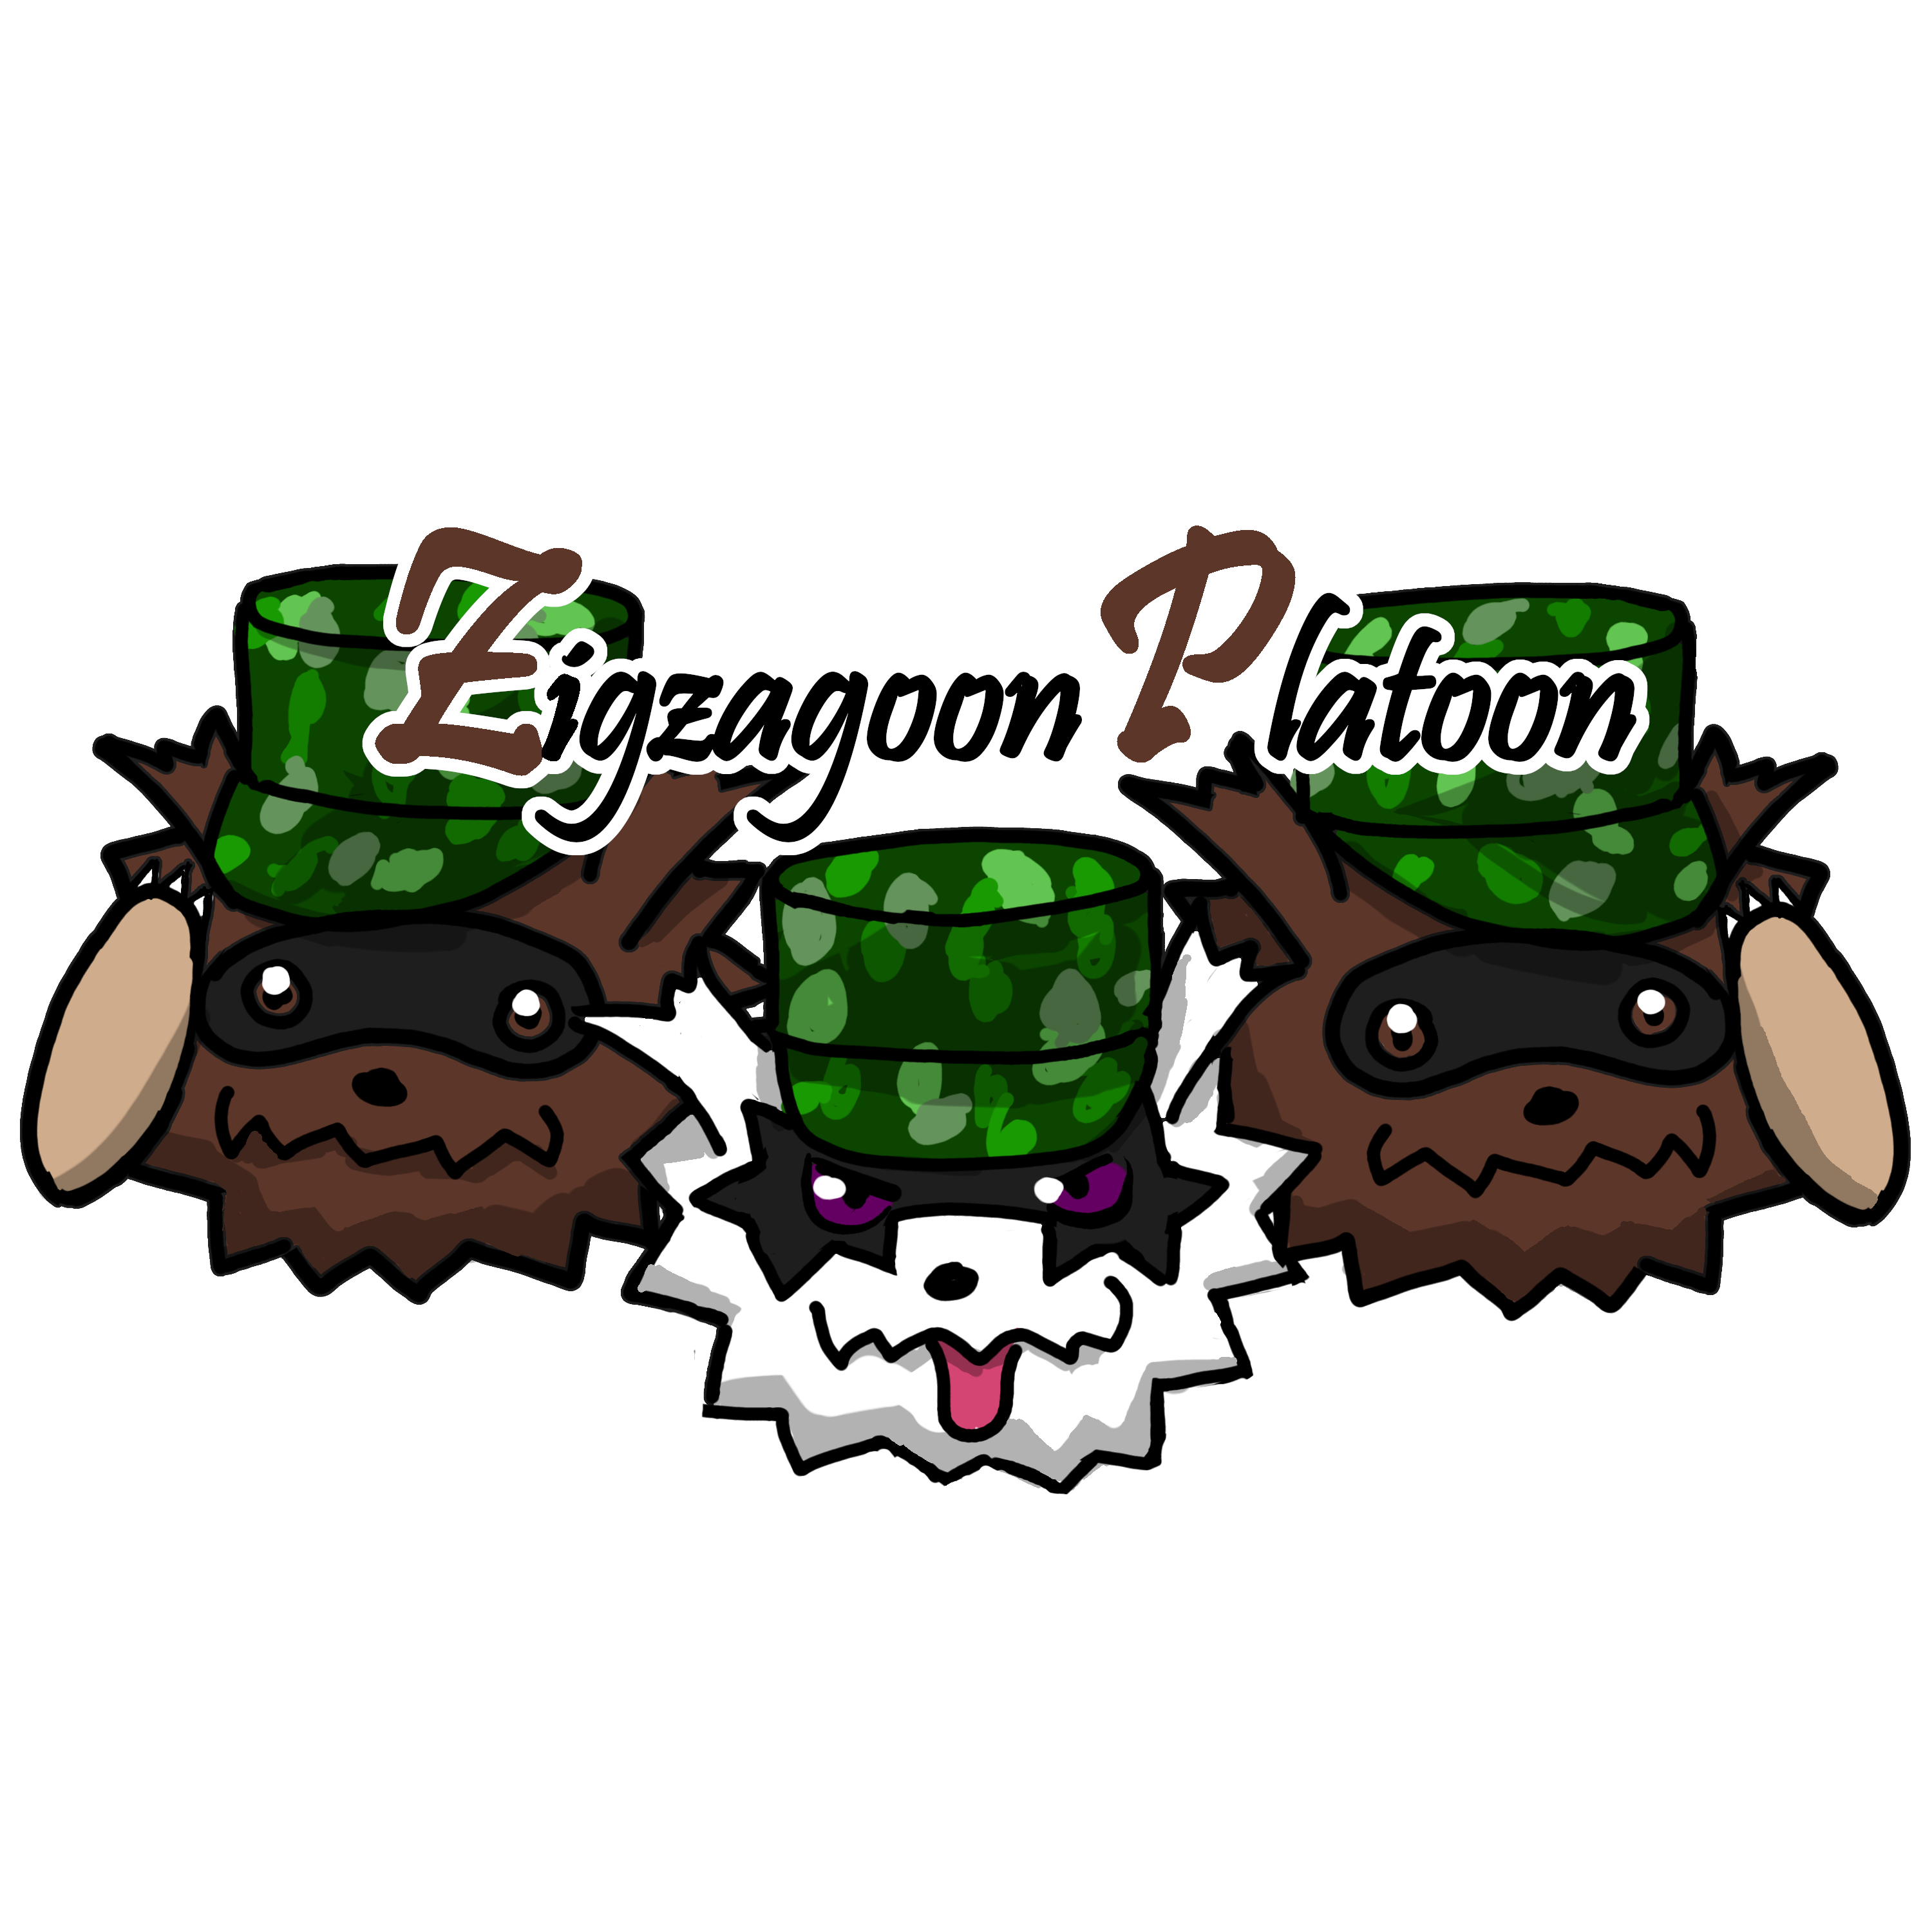 zigzagoon platoon logo.png